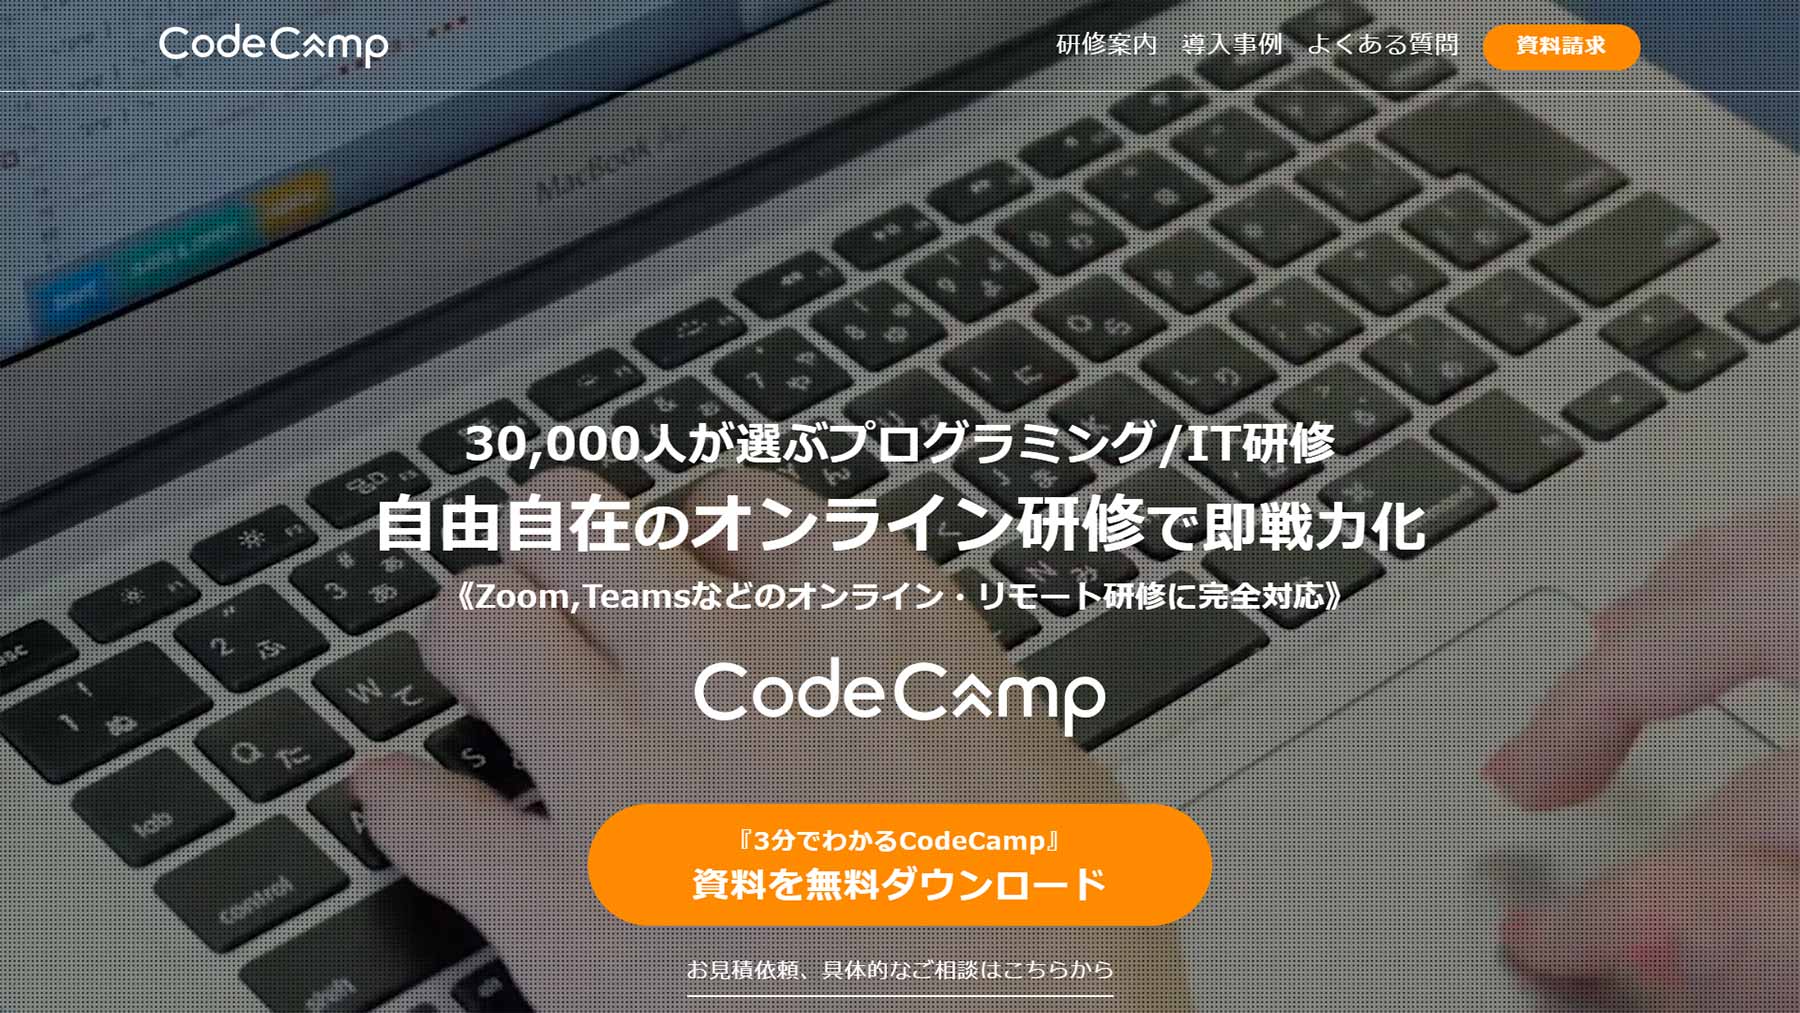 codecamp